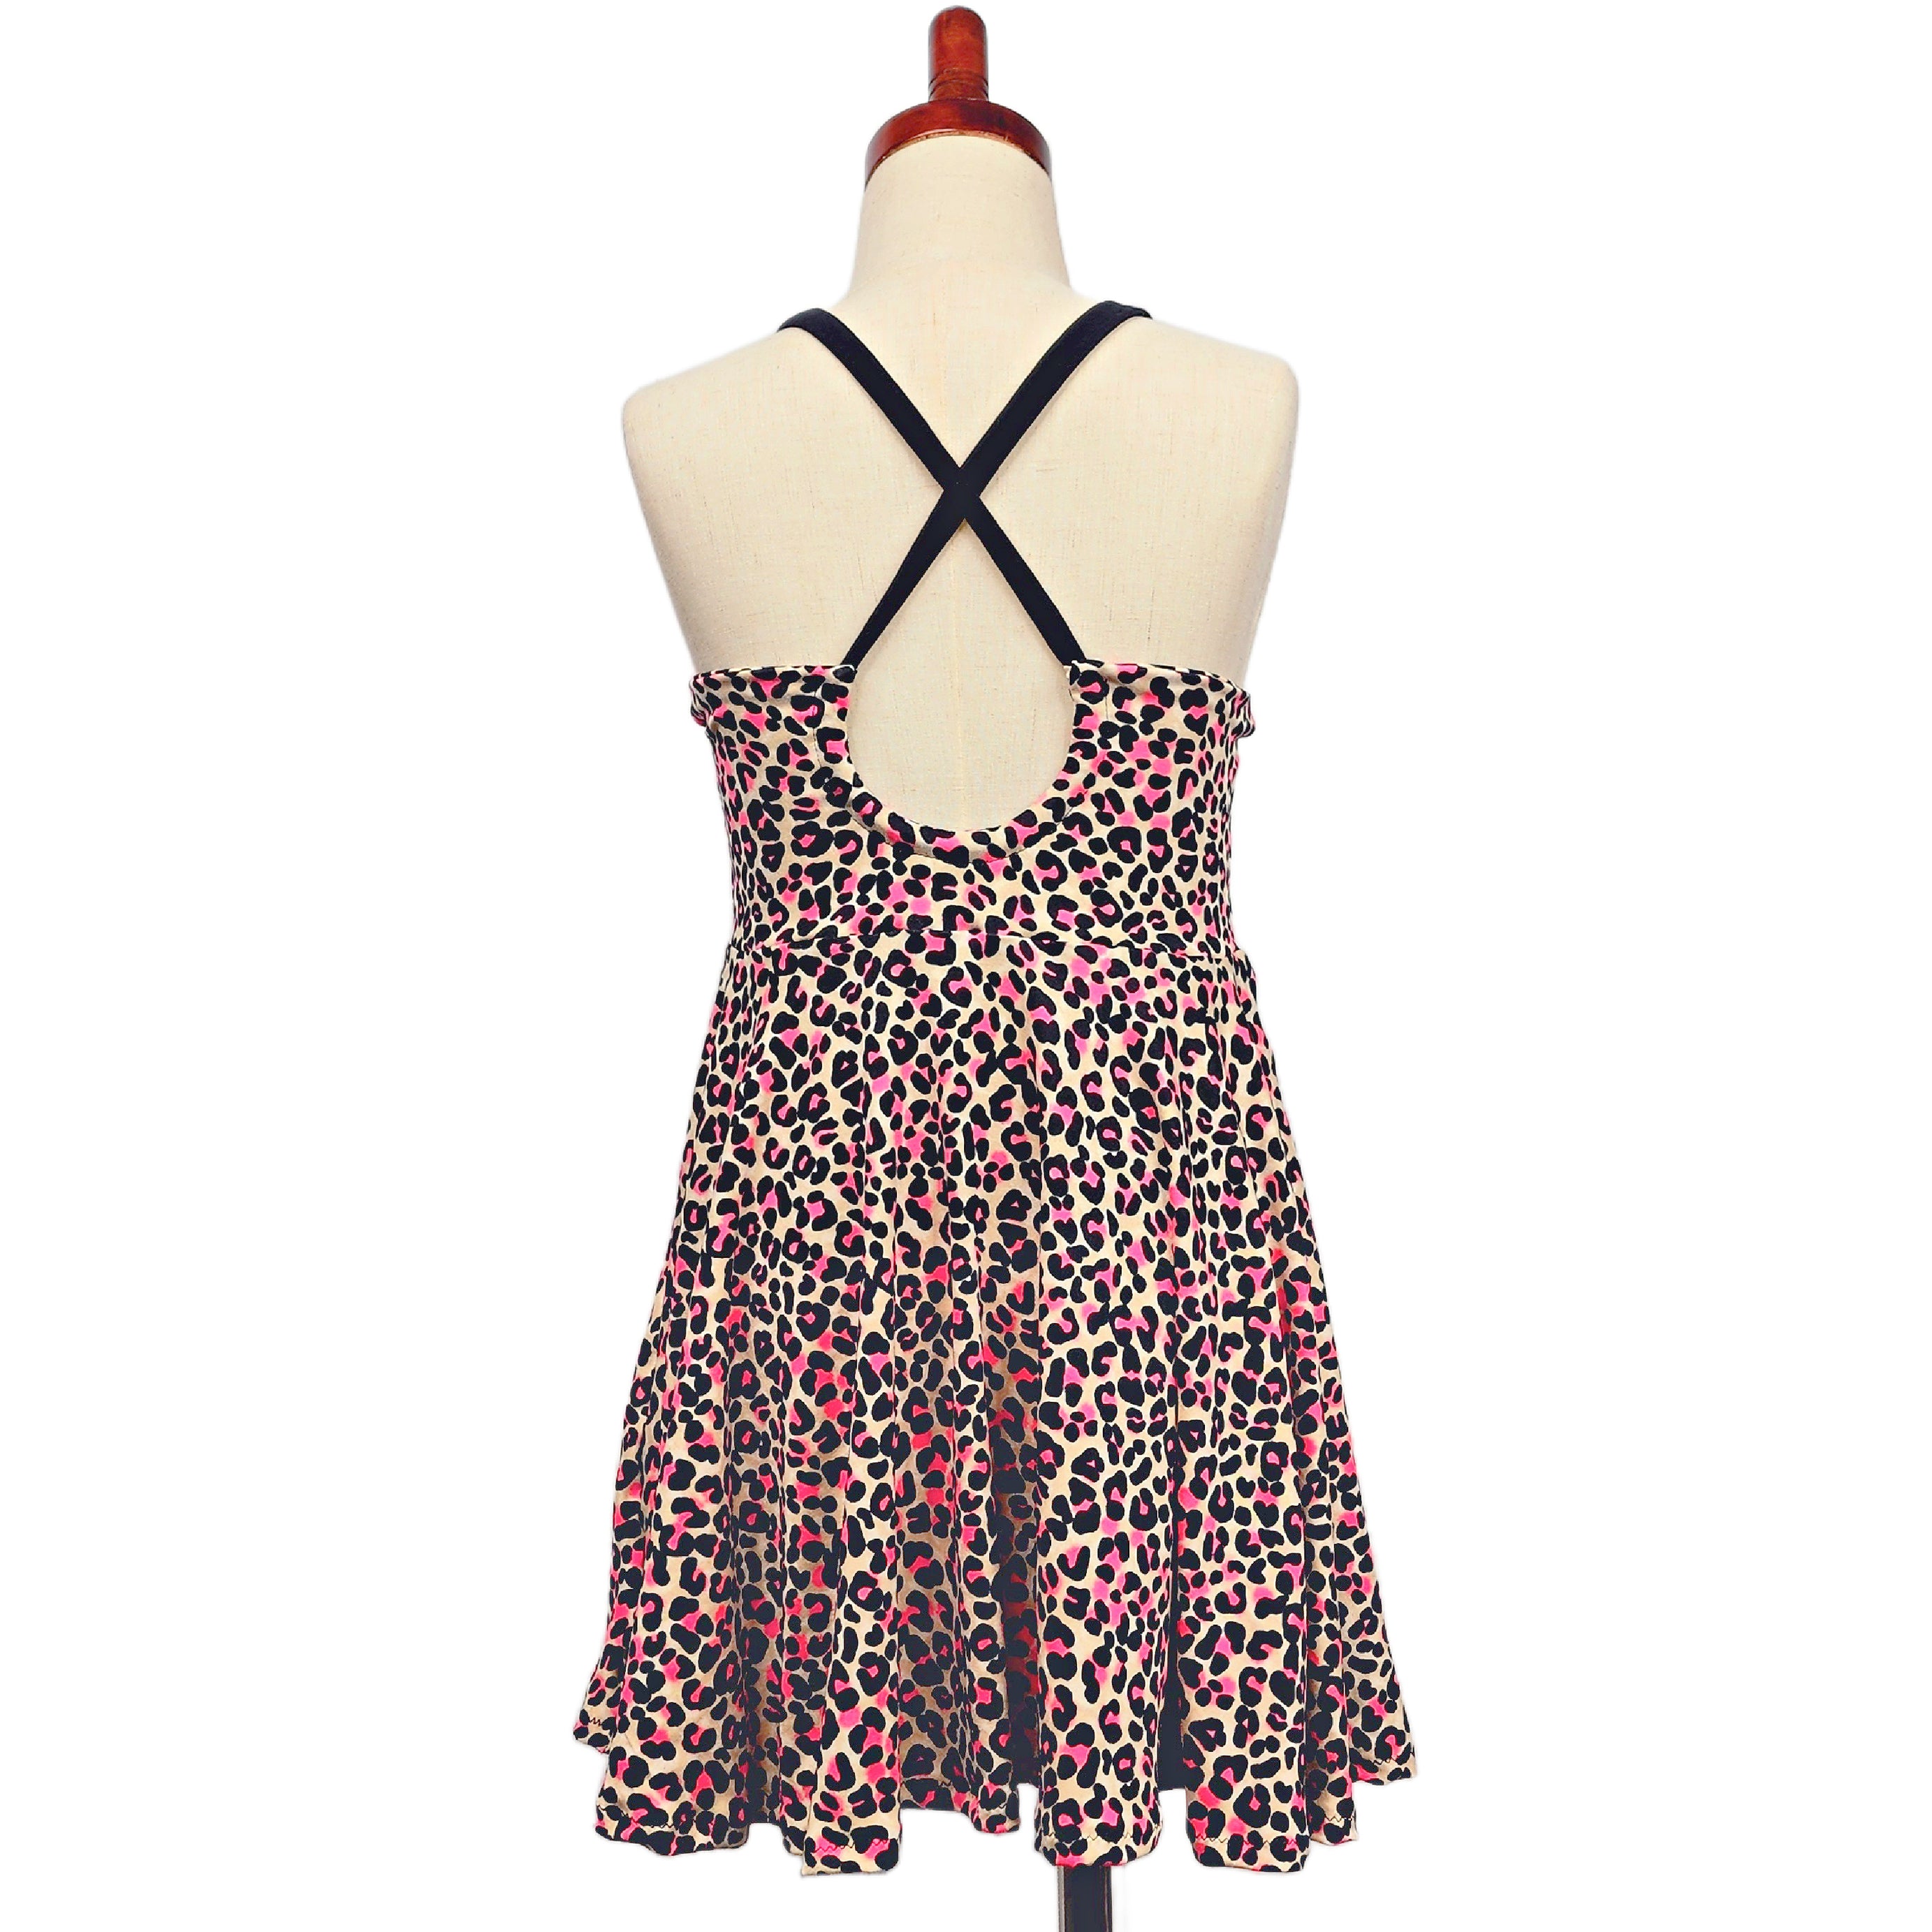 Neon Cheetah Print Summer Dress, Swimsuit Cover Up